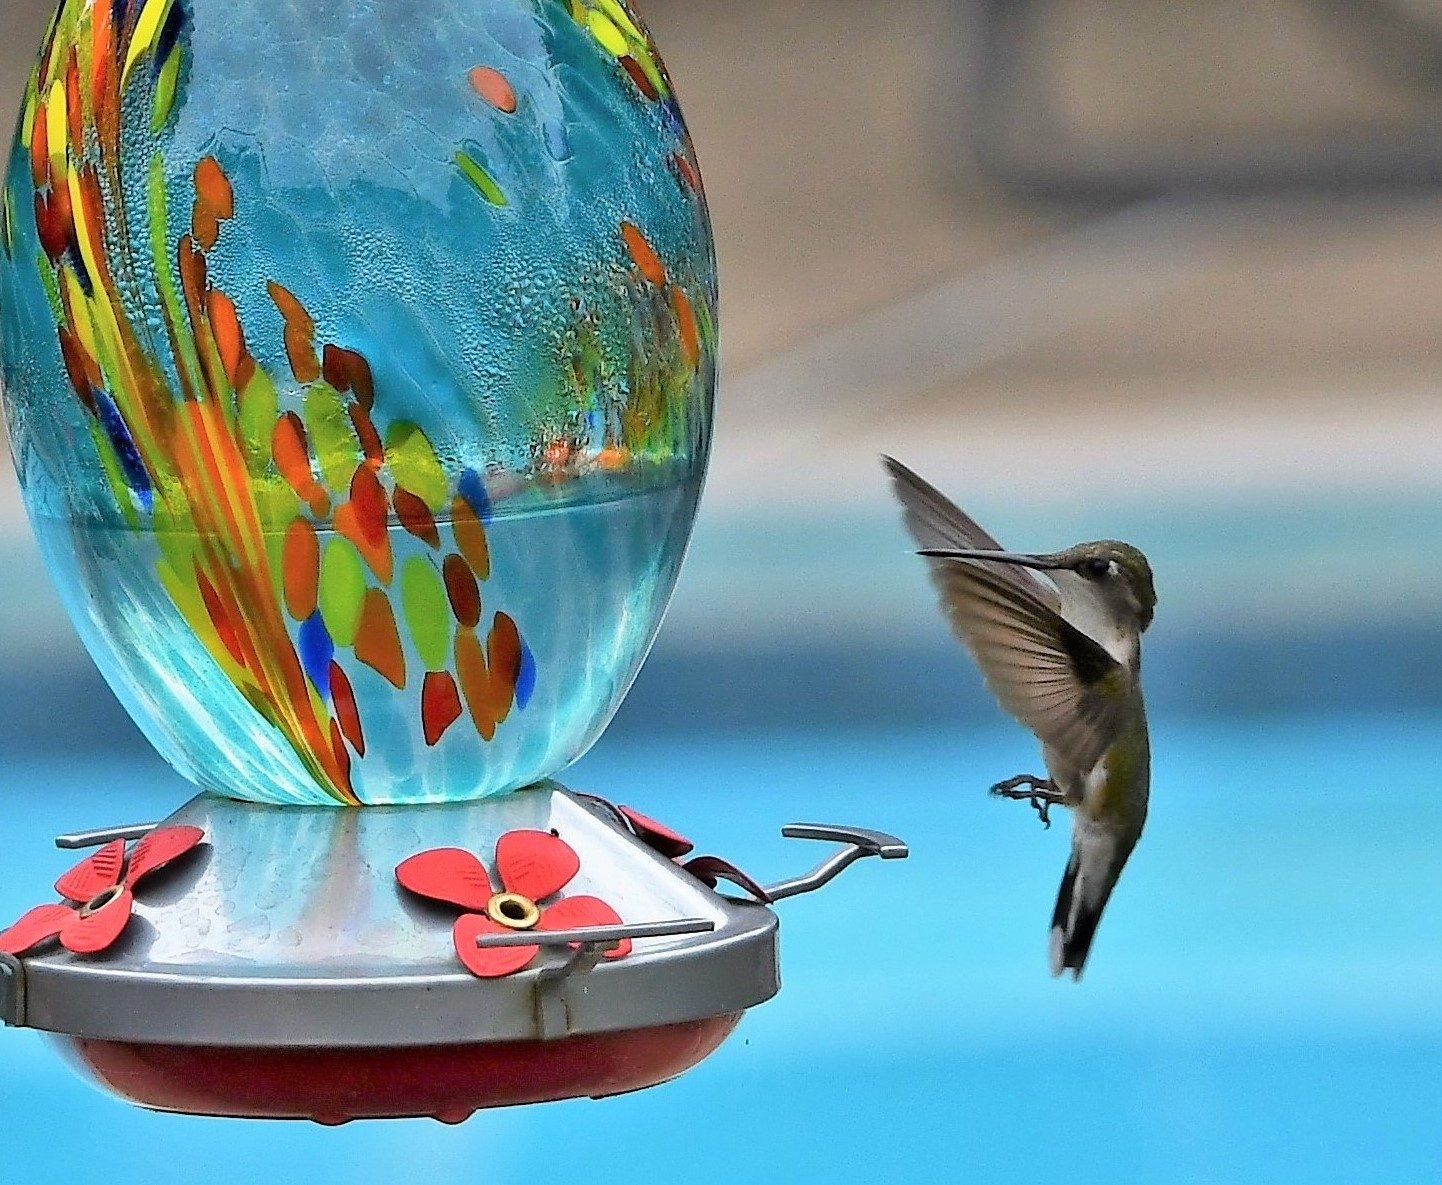 Is Salt Softened Water Dangerous for Hummingbird Food?